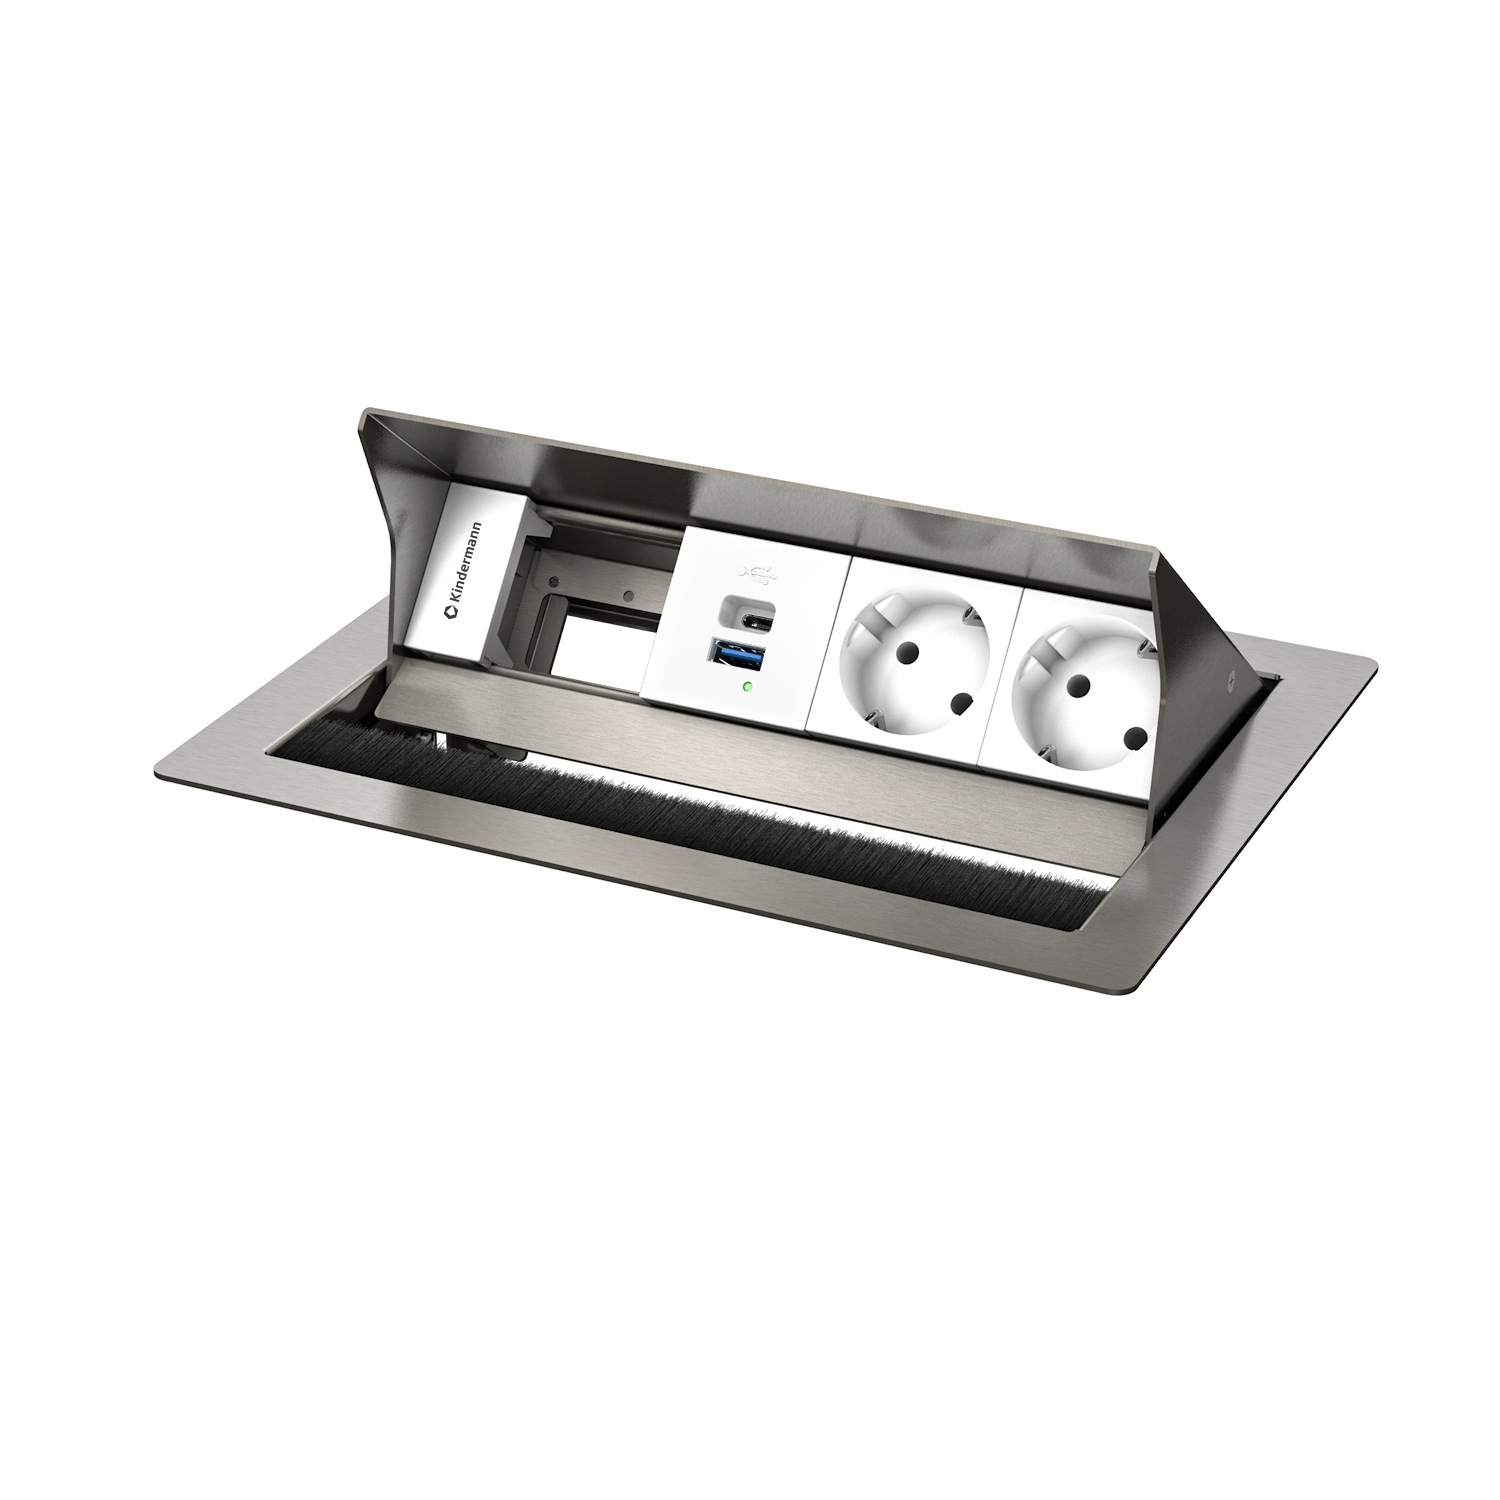 Kindermann Cableport Standard² 4-way 2x power - 1x USB-A / 1x USB-C - desktop housing - stainless steel